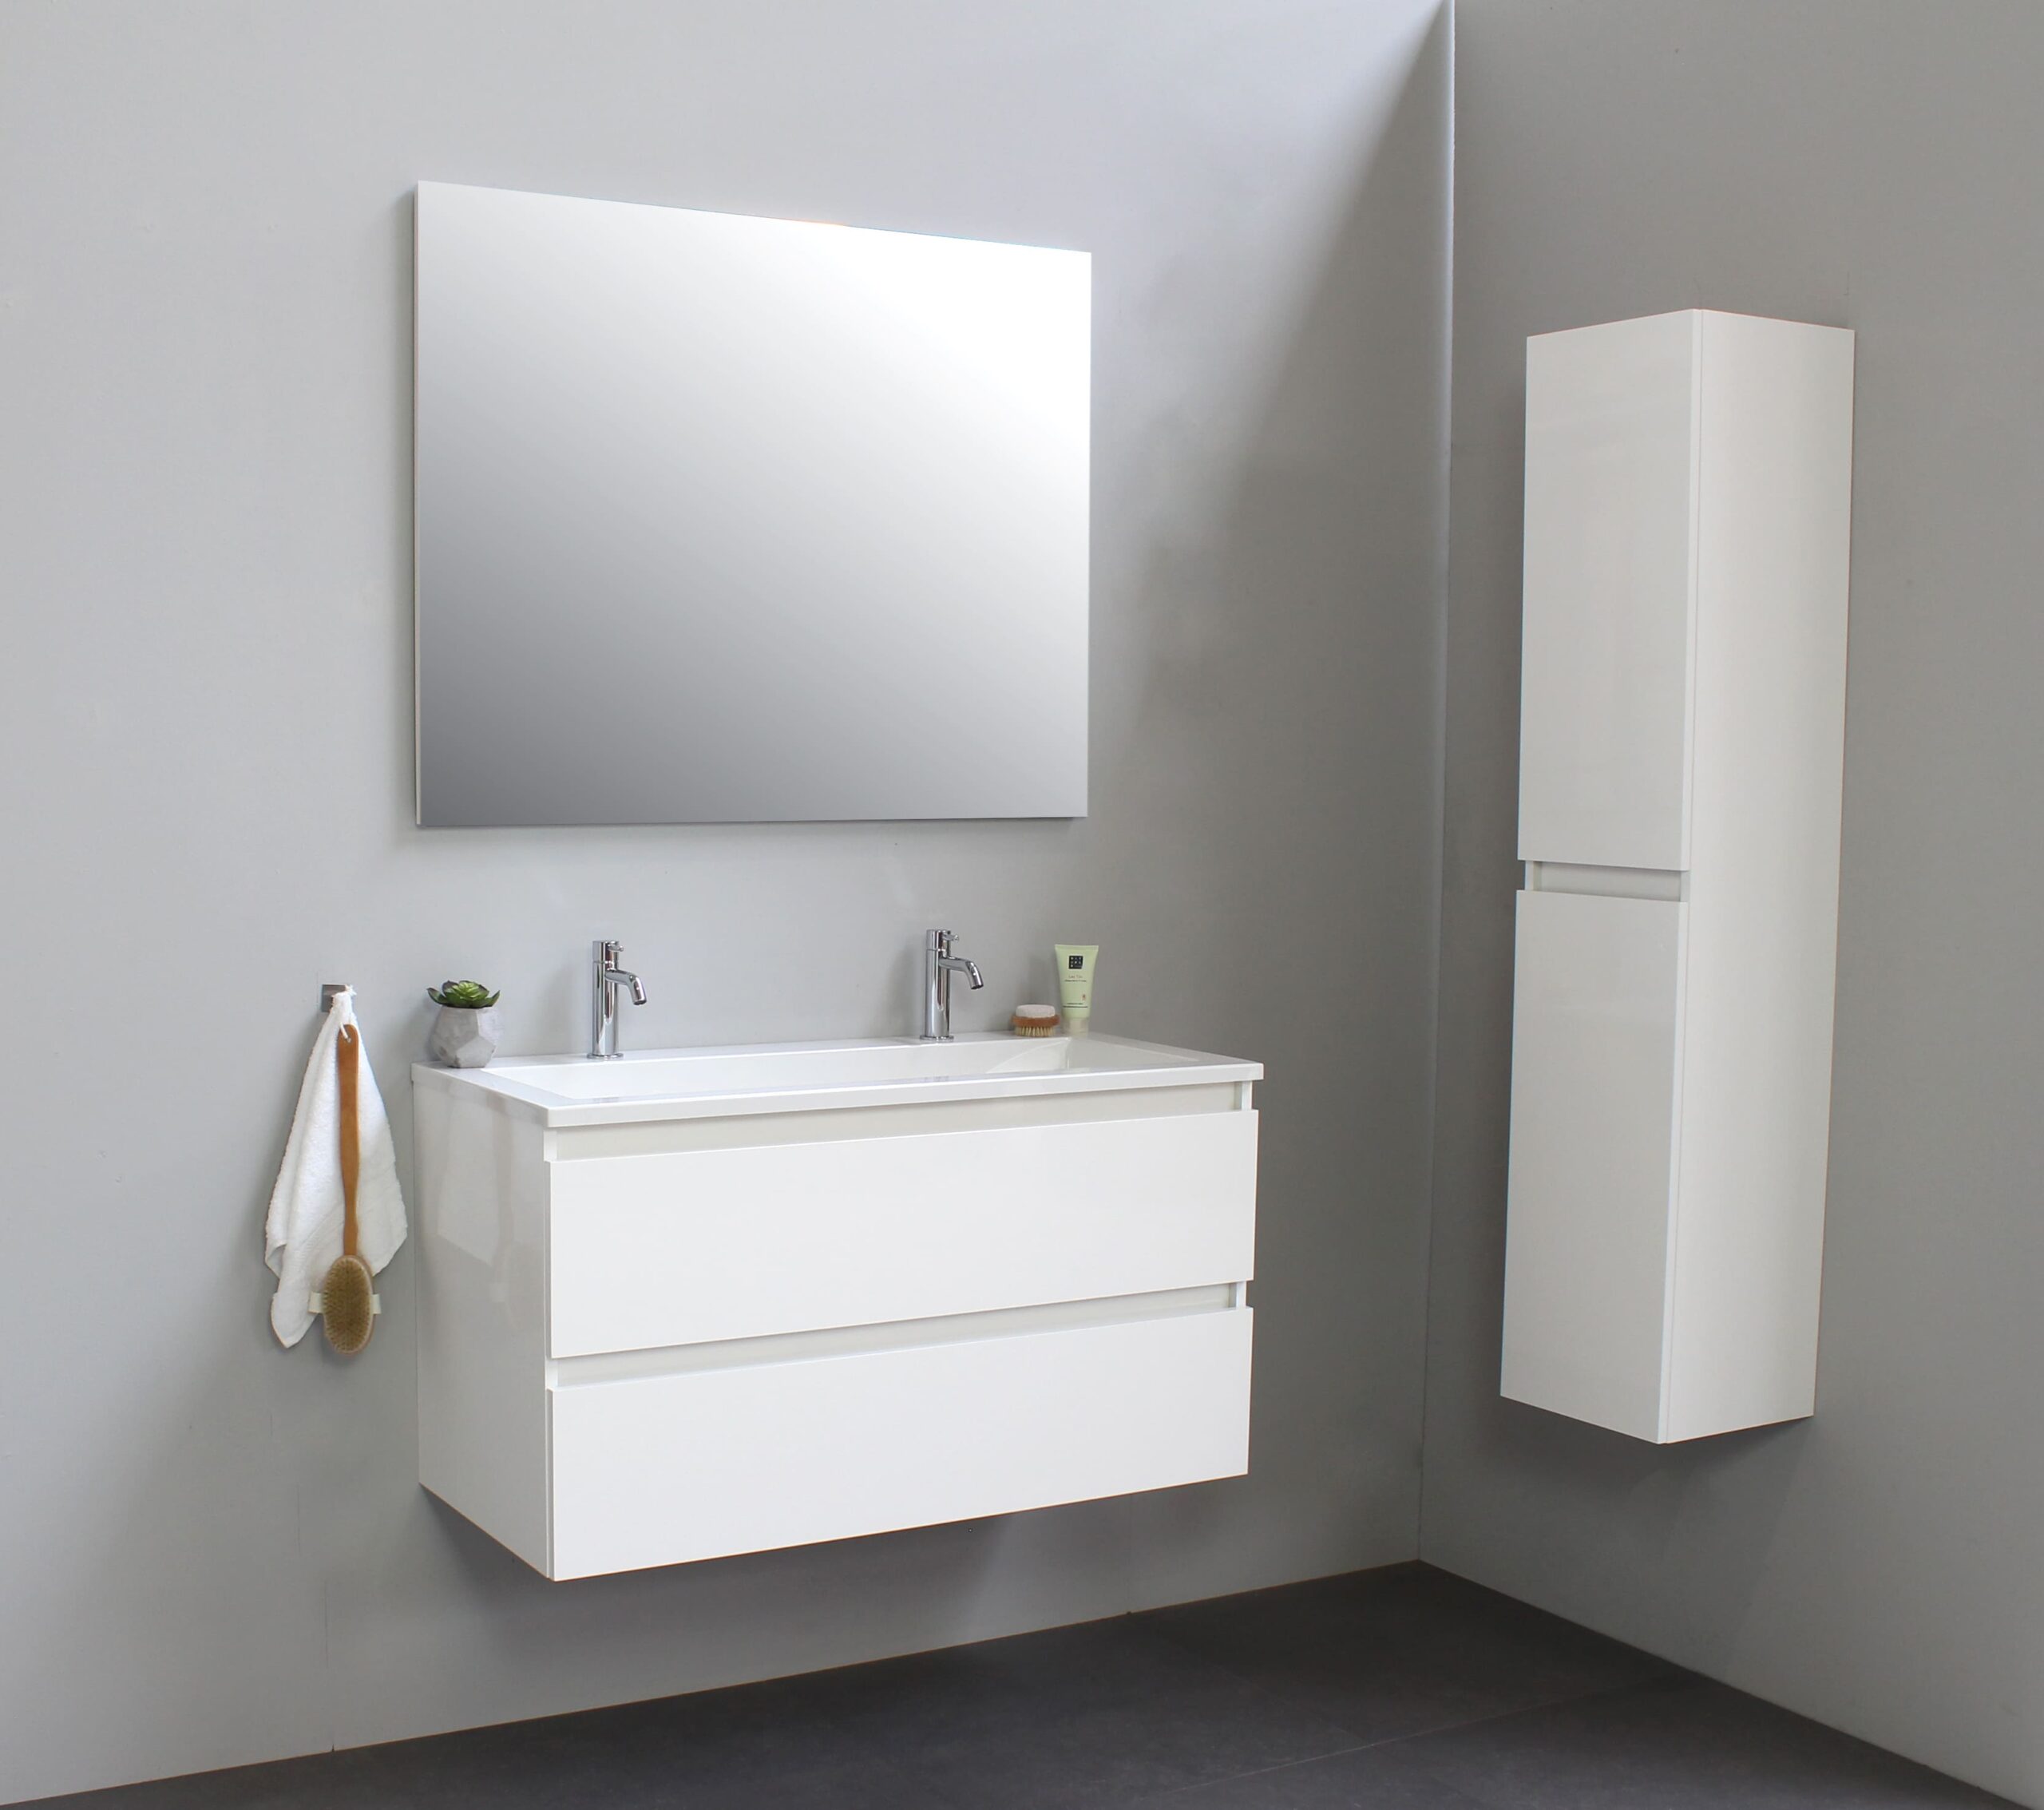 Sanilet badkamermeubel - 100cm - onderkast wit - mat zwart acryl wastafel - 1 kraangat - zonder spiegel - bouwpakket - Badkamermeubel outlet